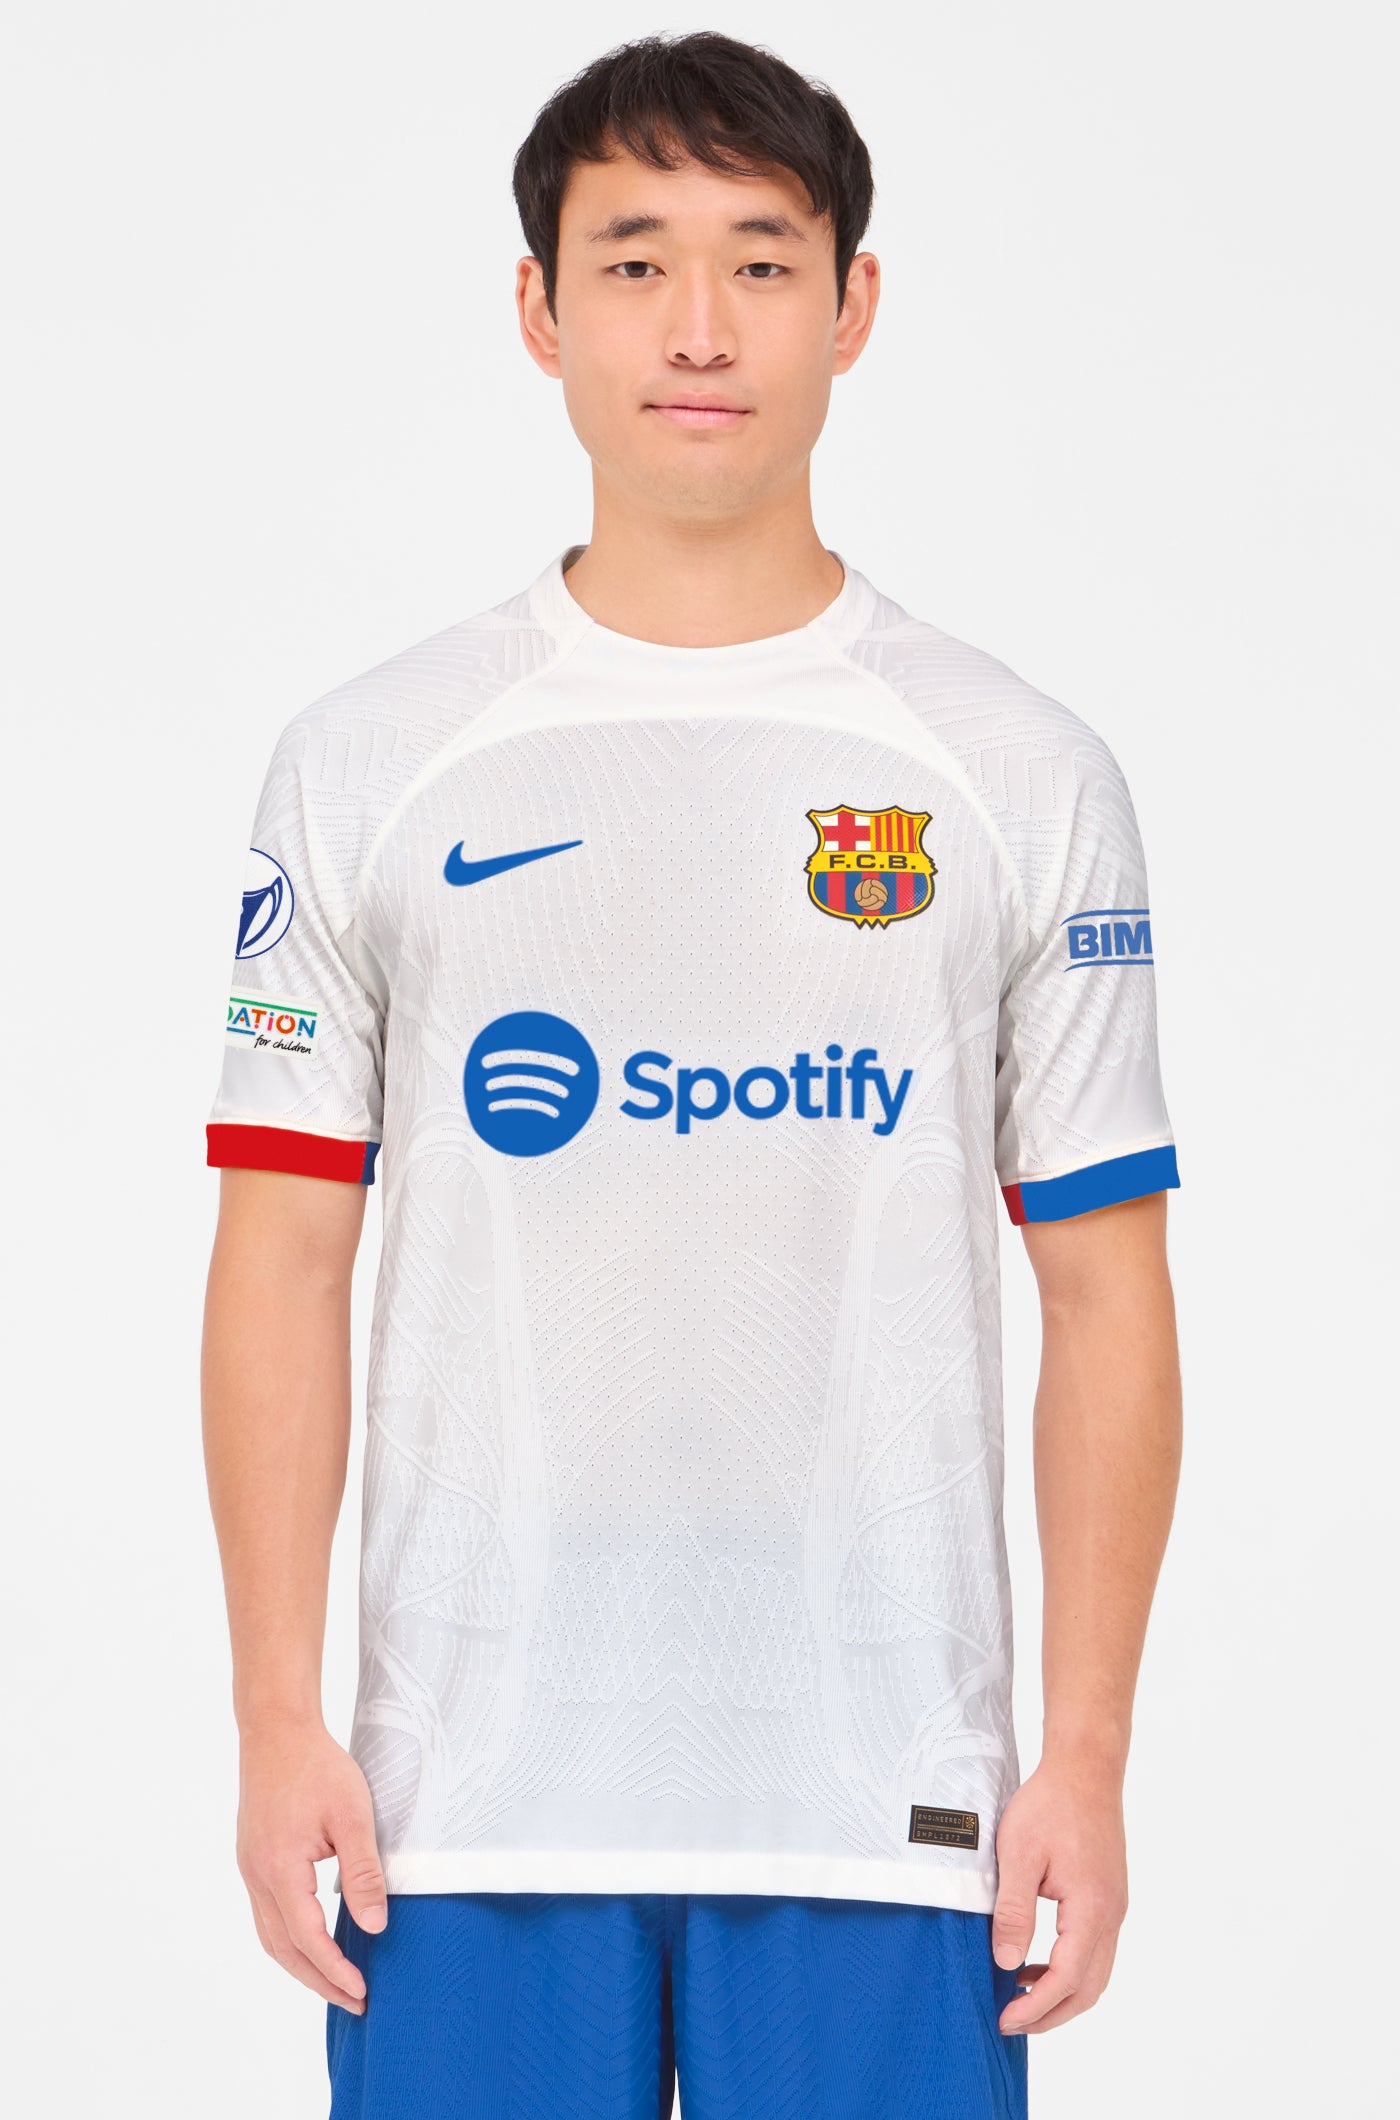 UWCL FC Barcelona away shirt 23/24 Player's Edition - ALEXIA